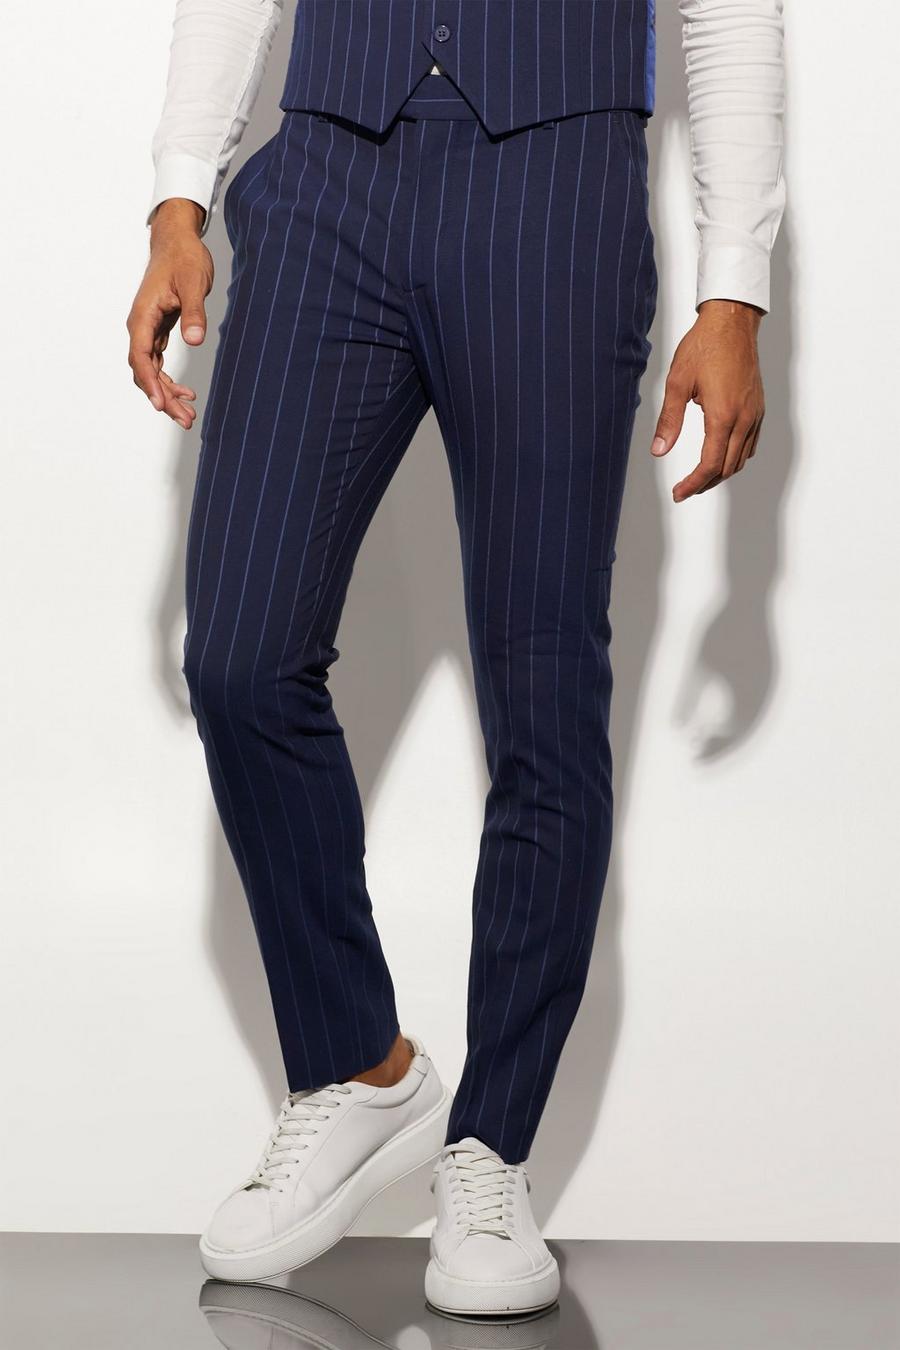 Pantaloni completo Skinny Fit blu navy a righe verticali, Blu oltremare navy